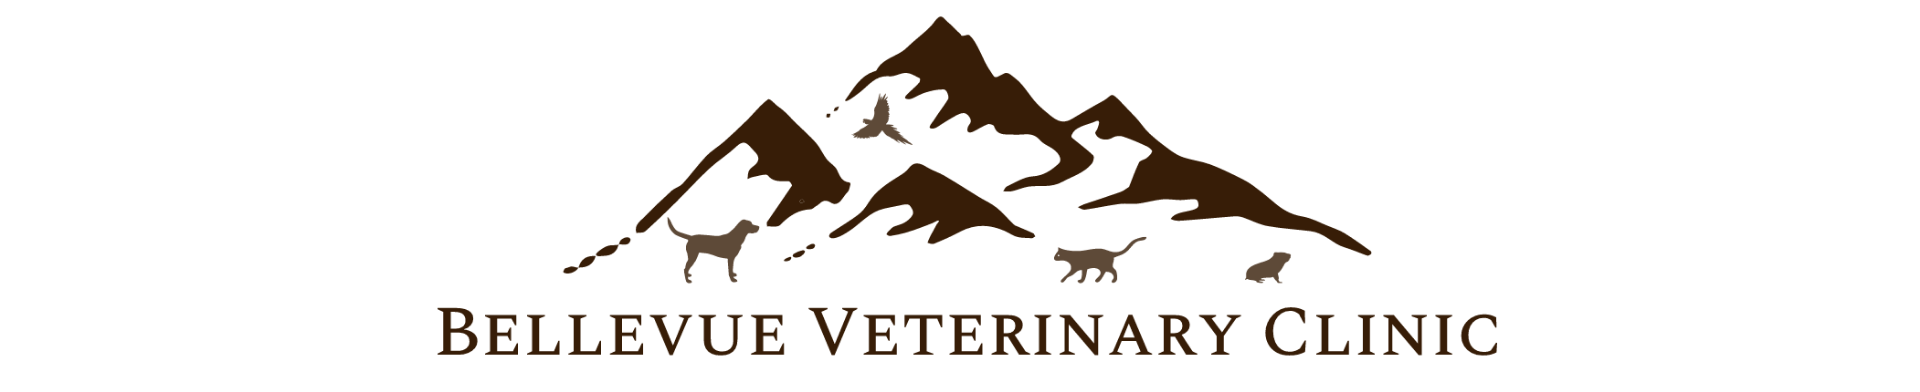 Bellevue Veterinary Clinic